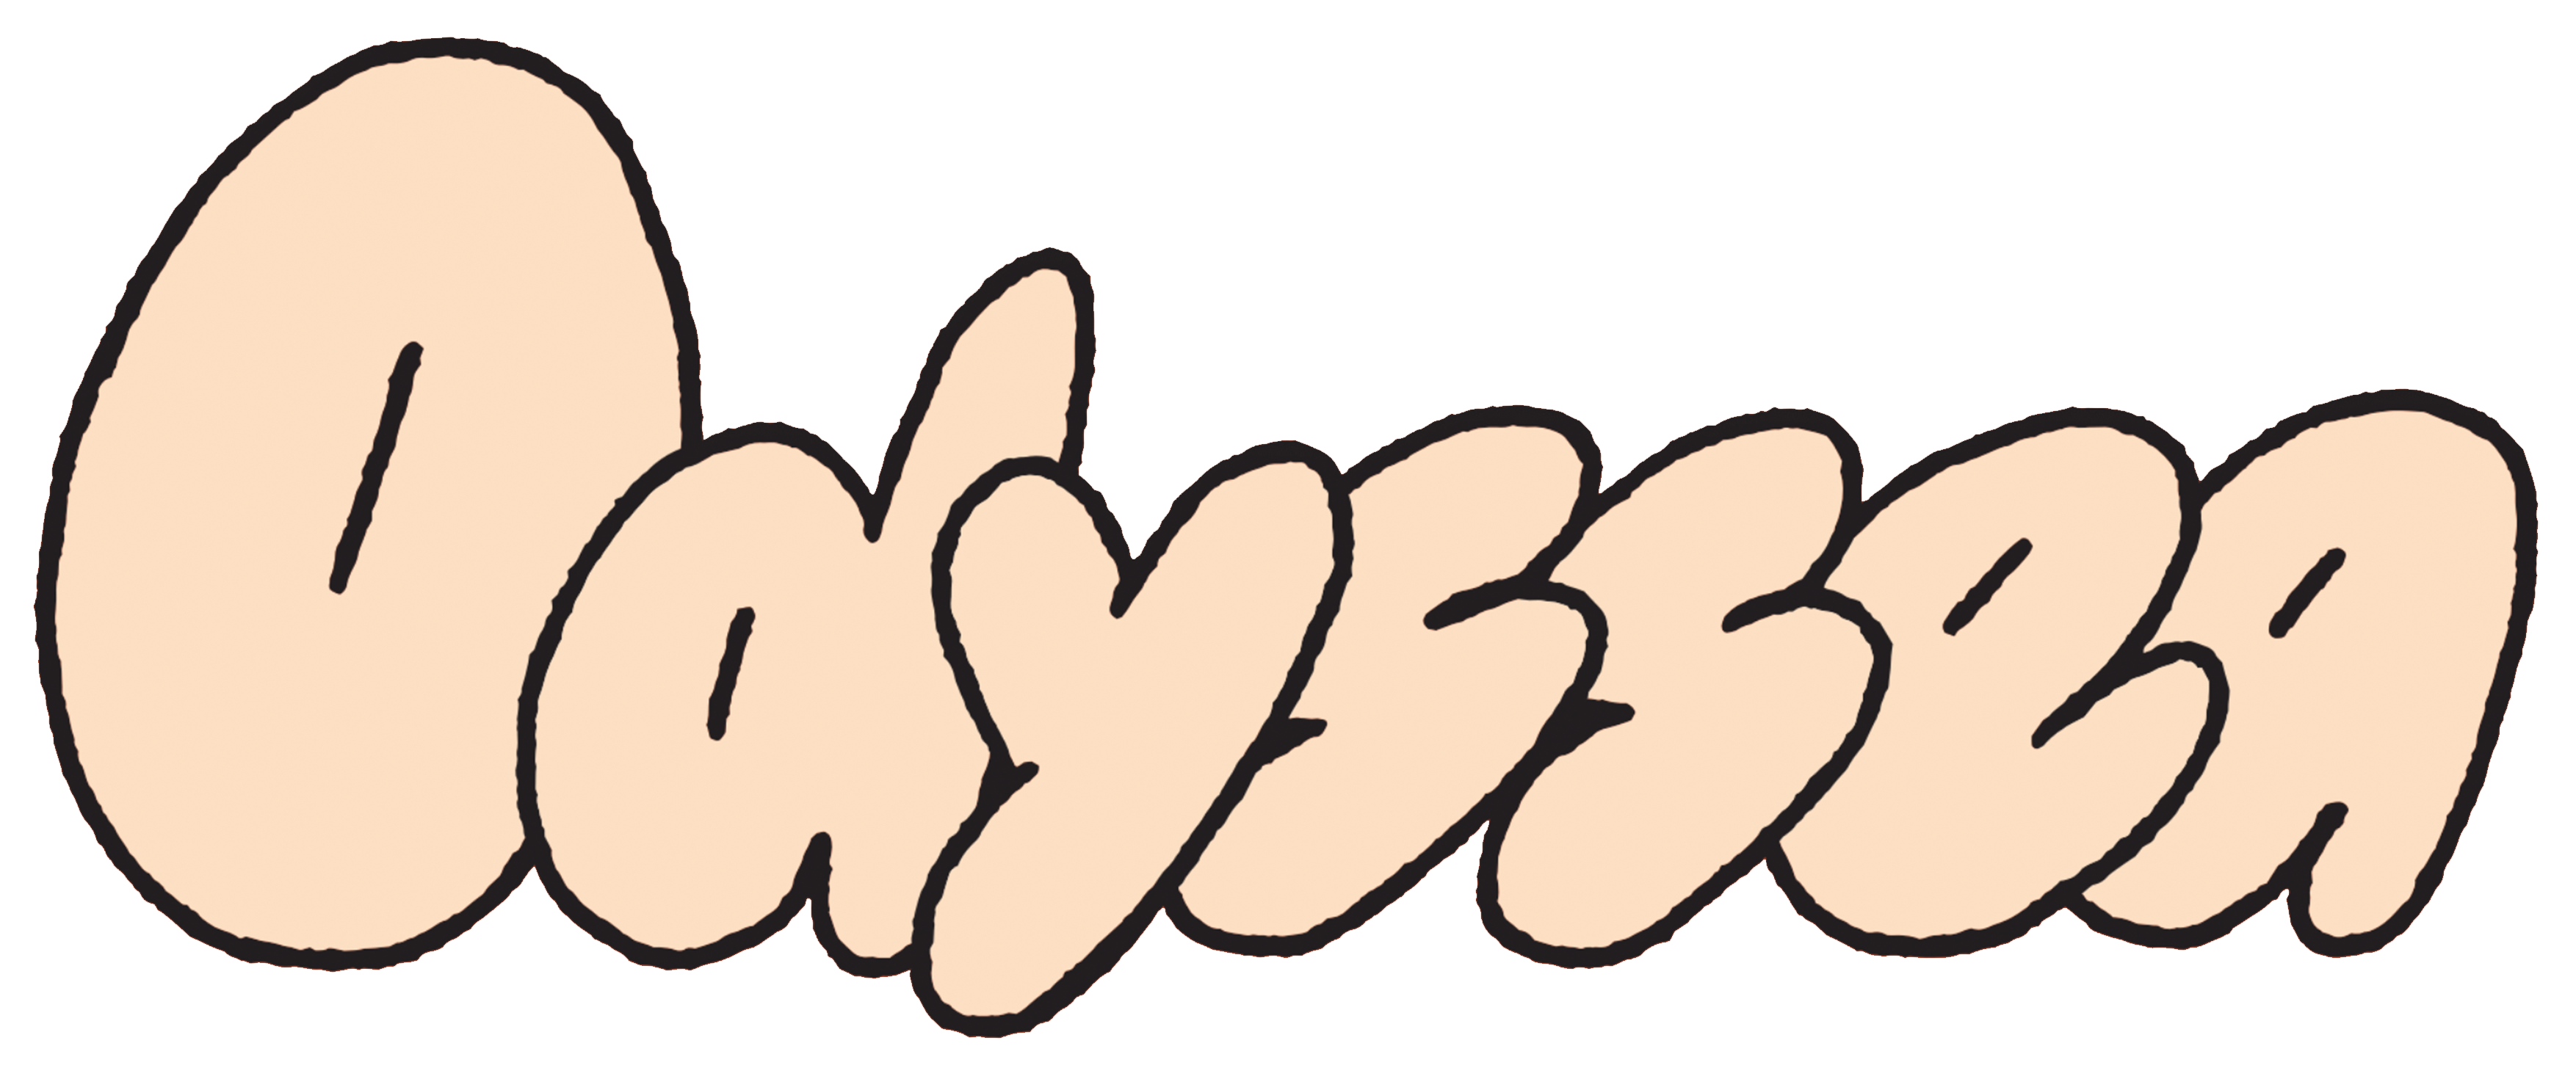 Odyssea logo